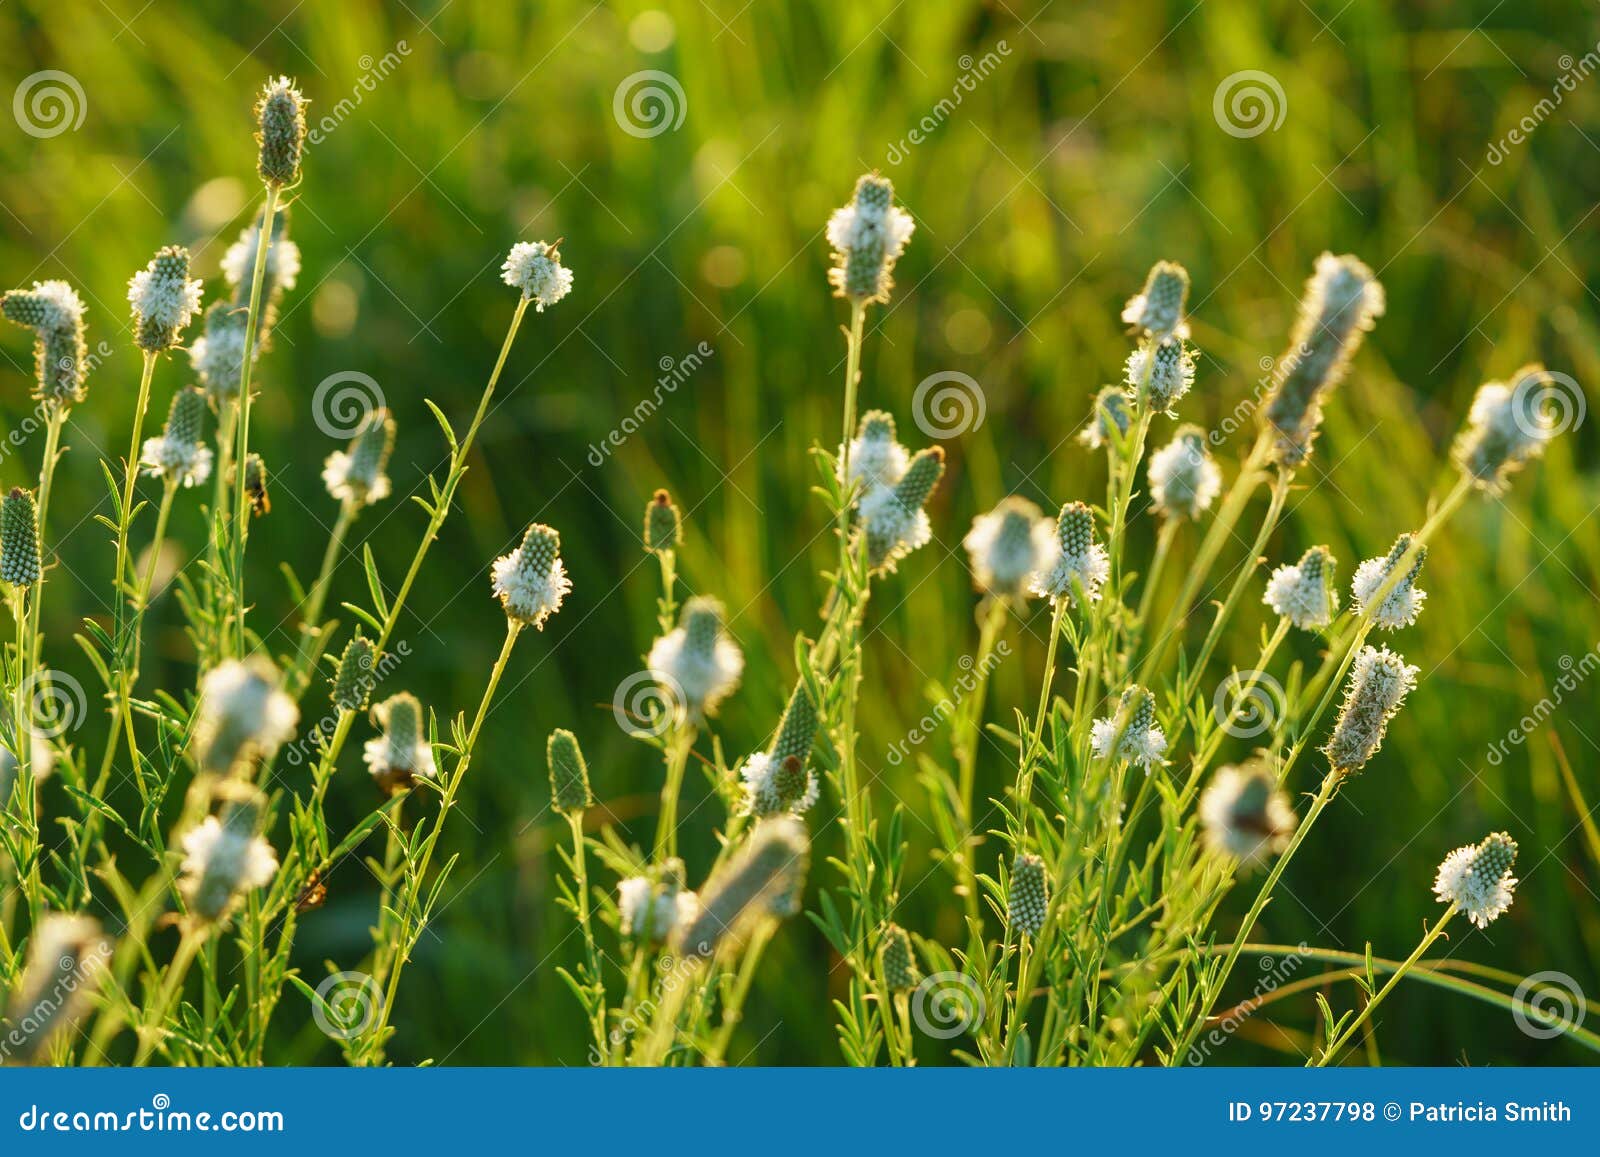 white prairie clover - dalea candida